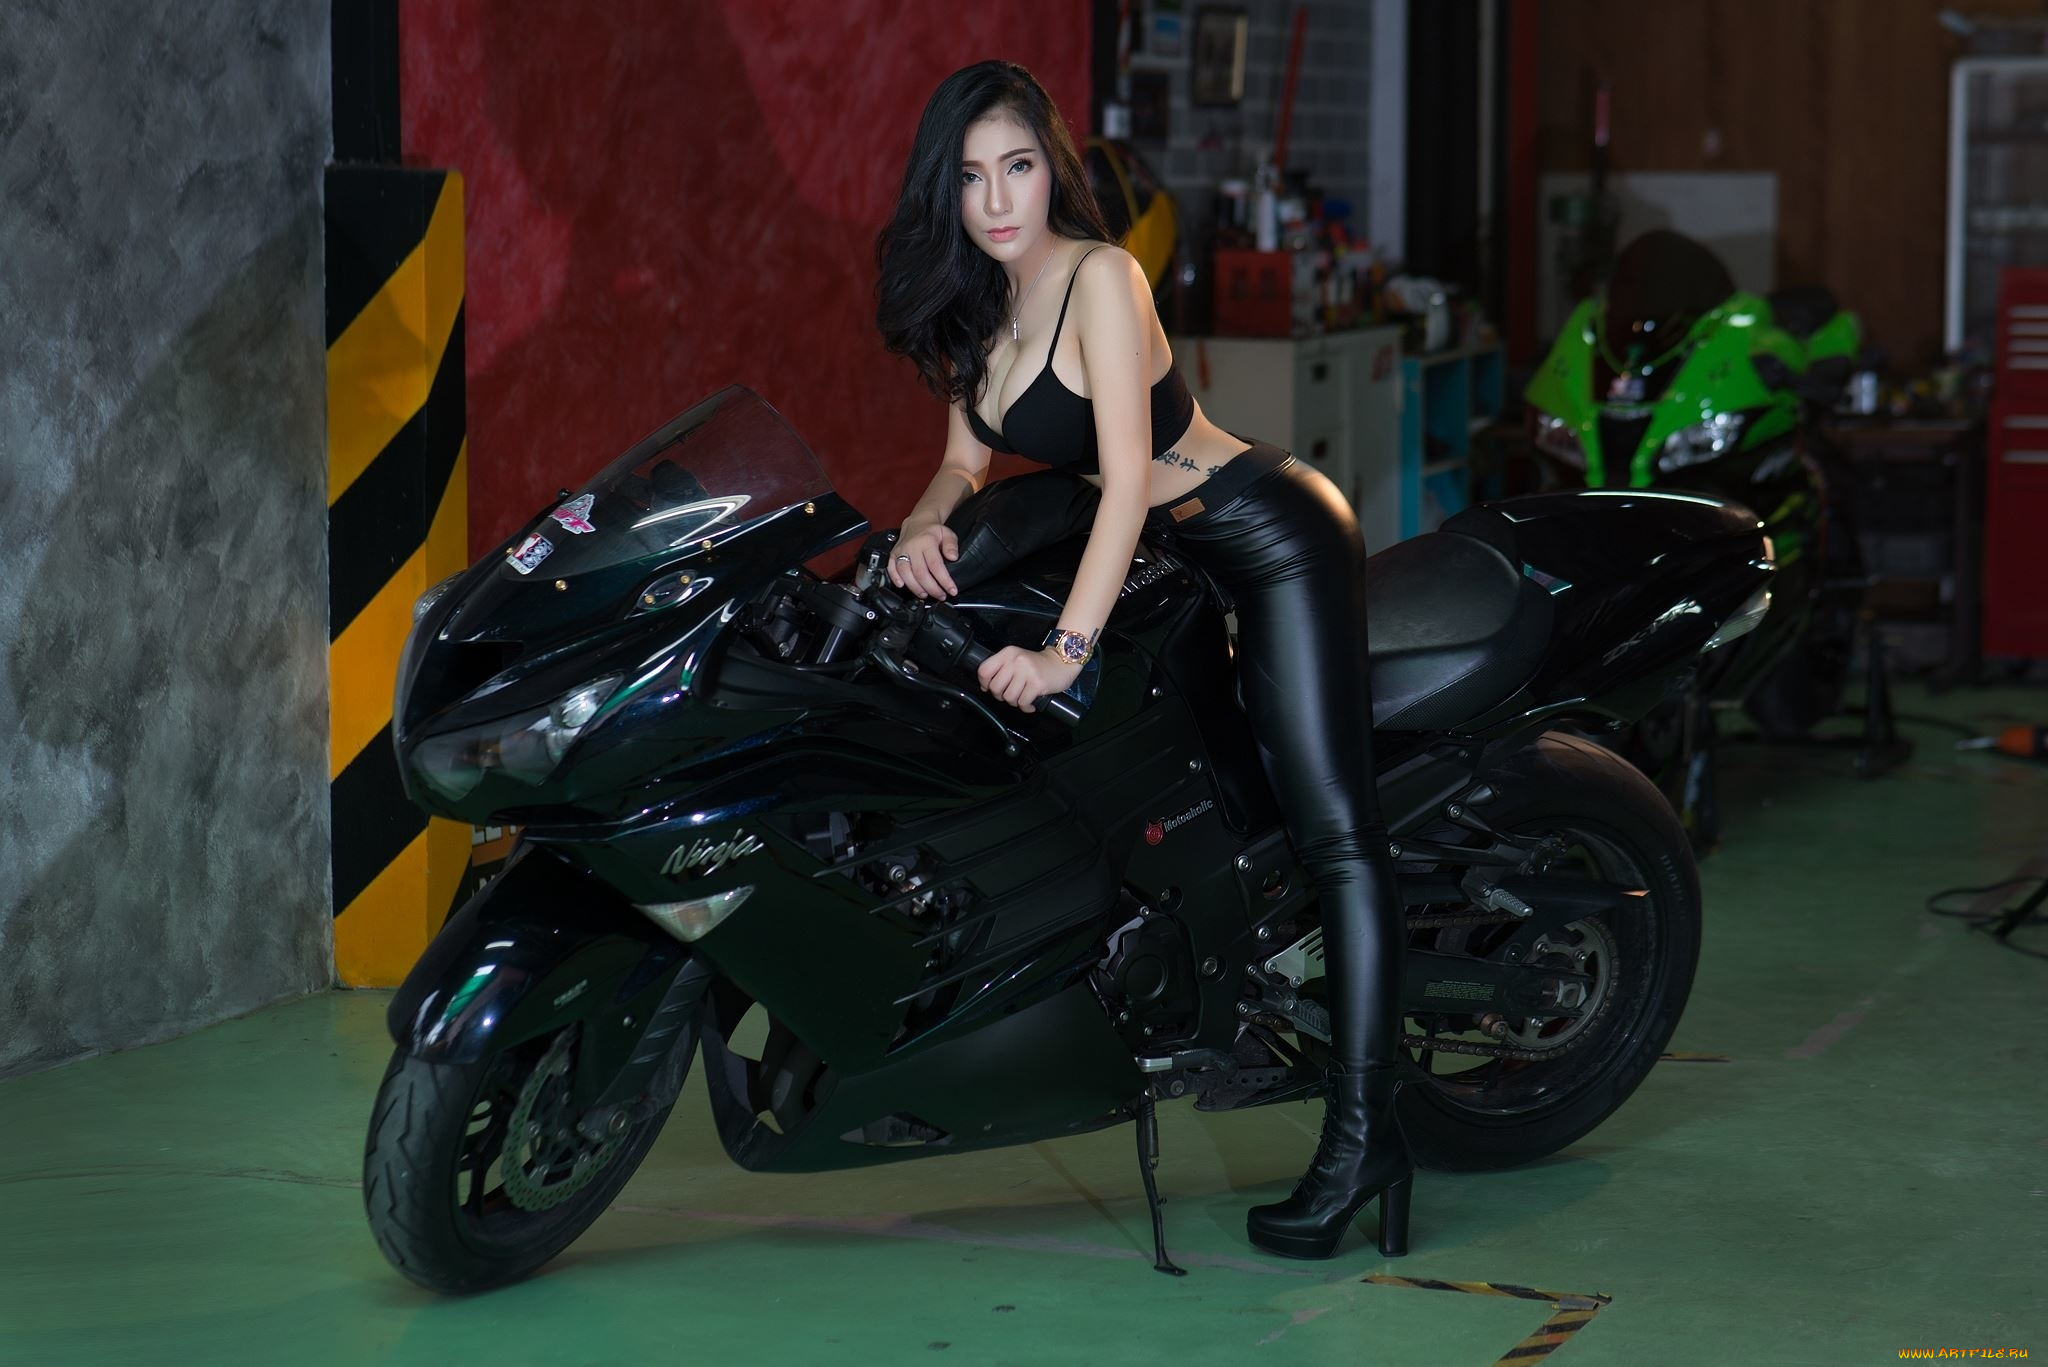 мотоциклы, мото, с, девушкой, zx-14r, мотоцикл, ninja, kawasaki, байкерша